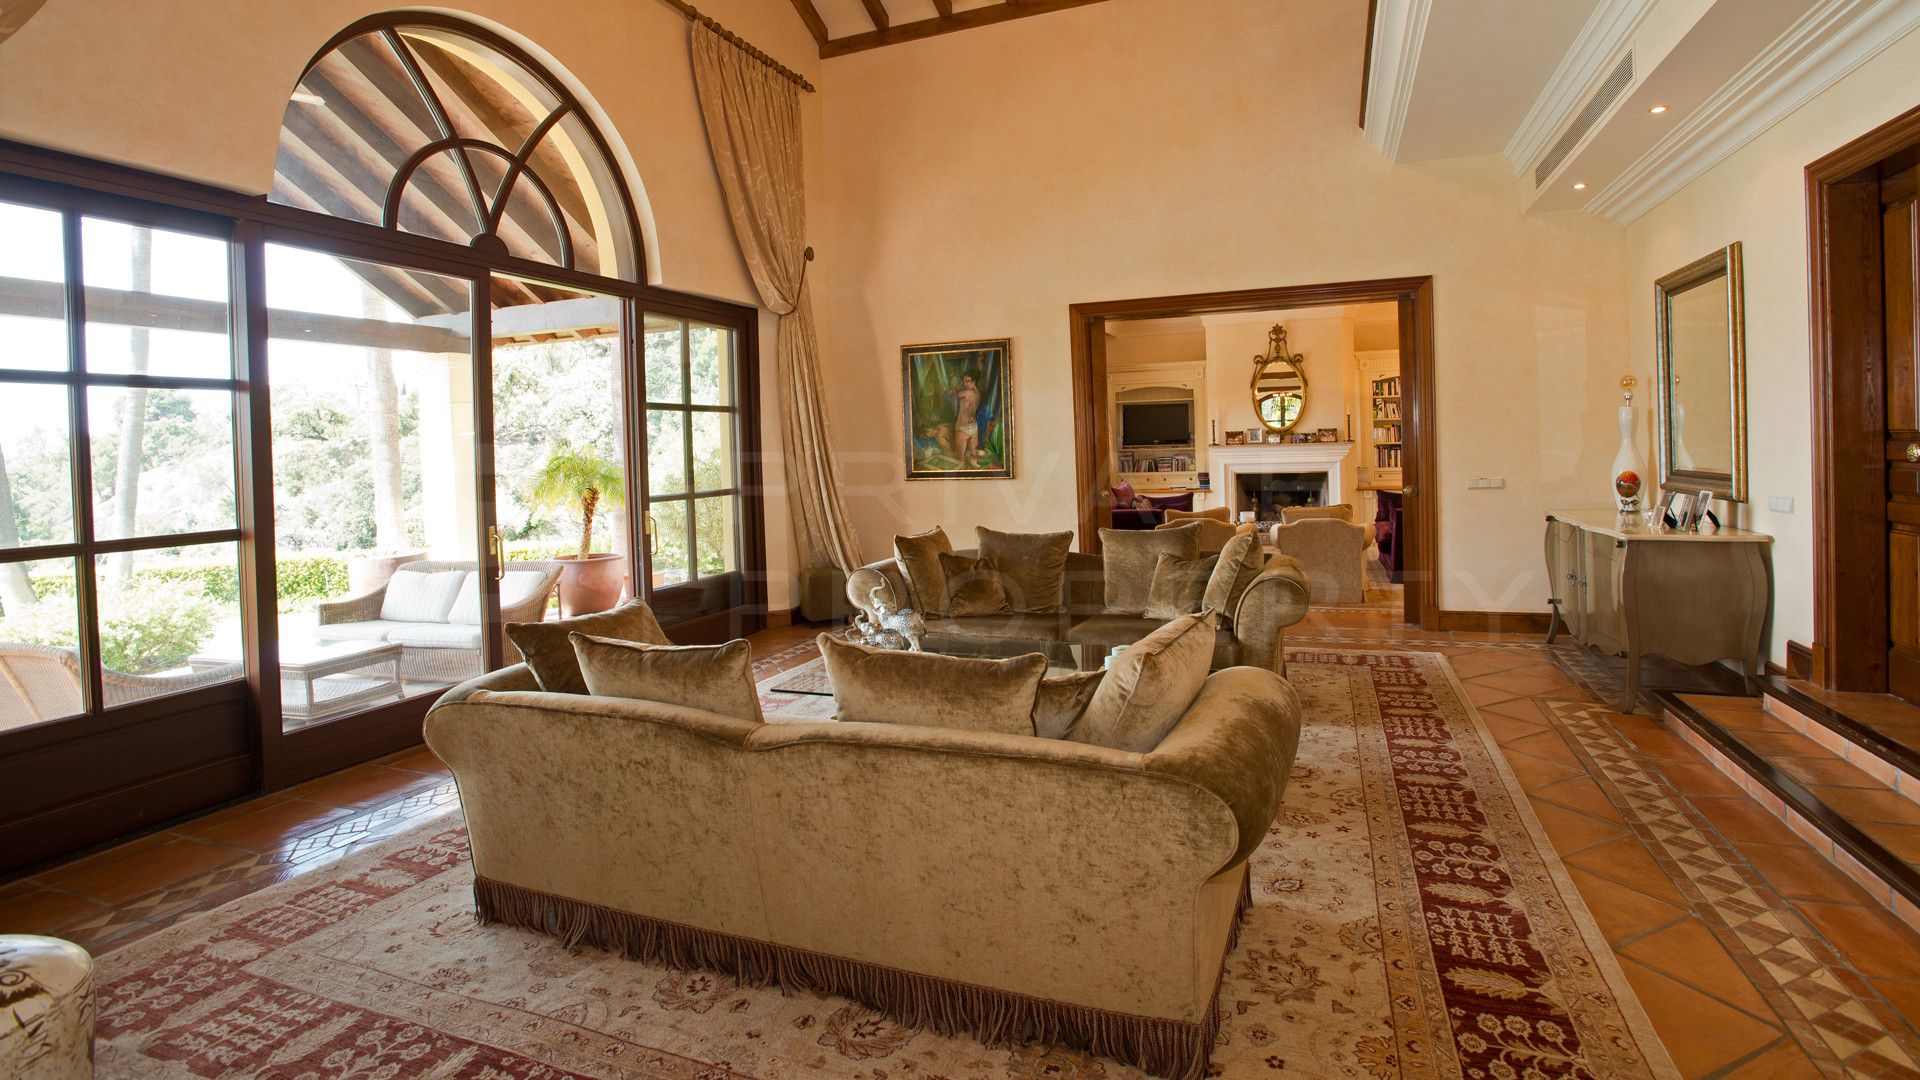 Villa for rent in La Zagaleta